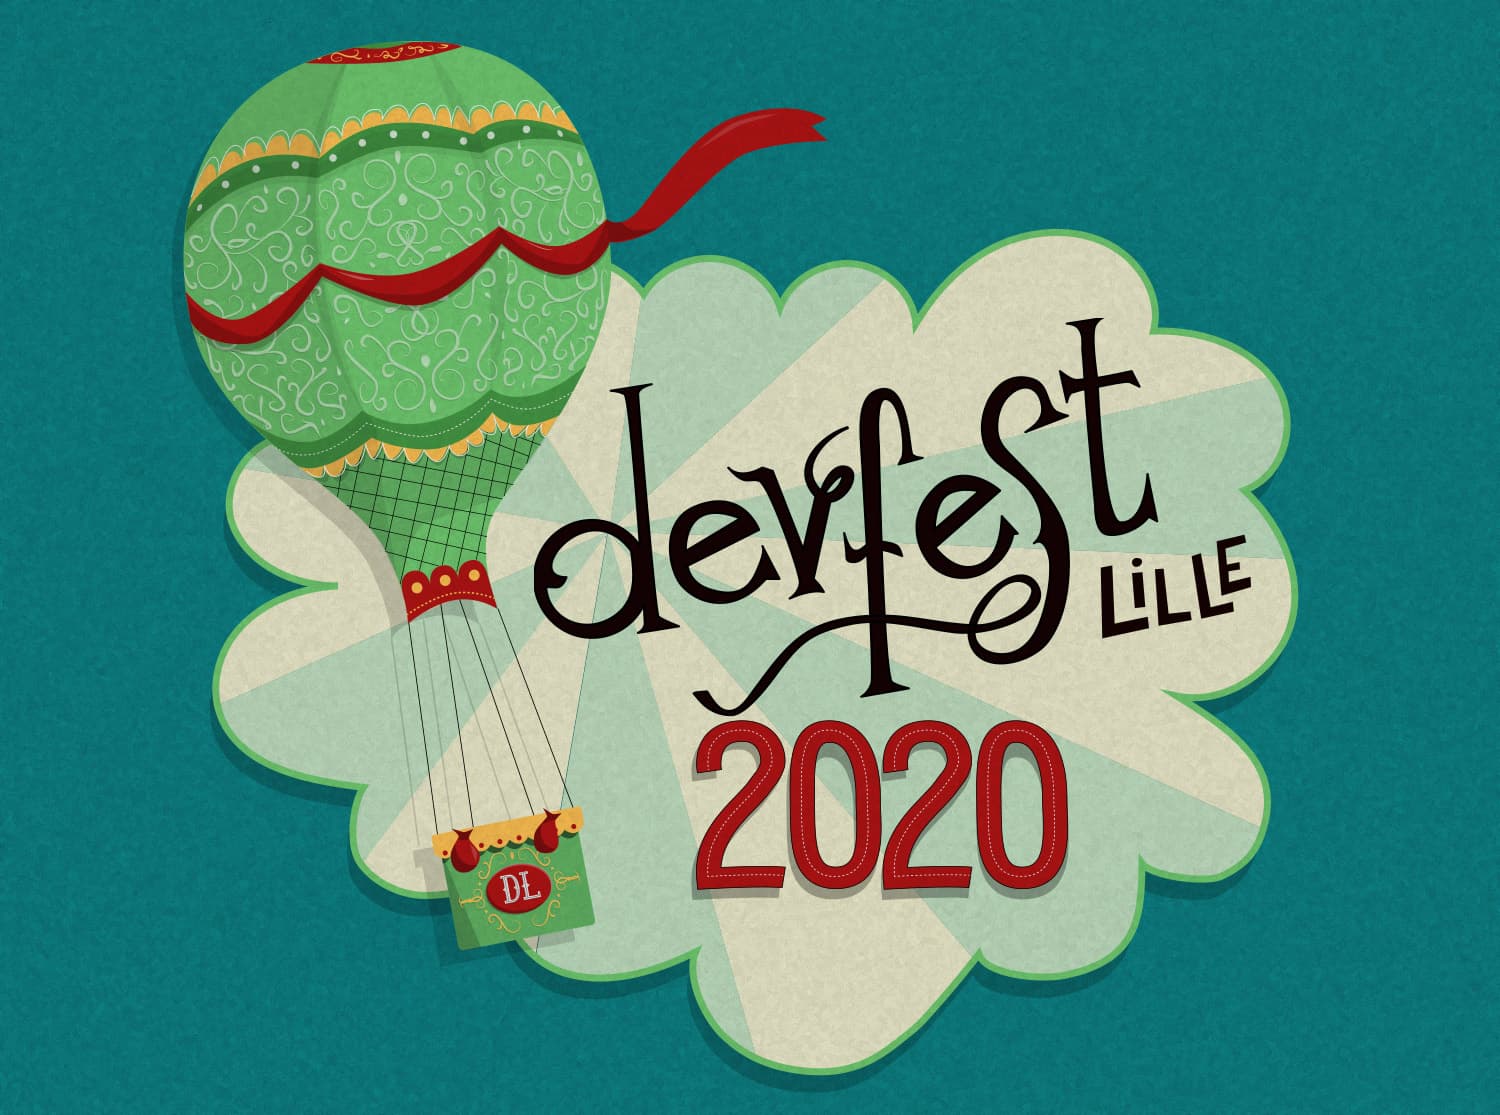 Devfest Lille 2020/21 logo - Season 4